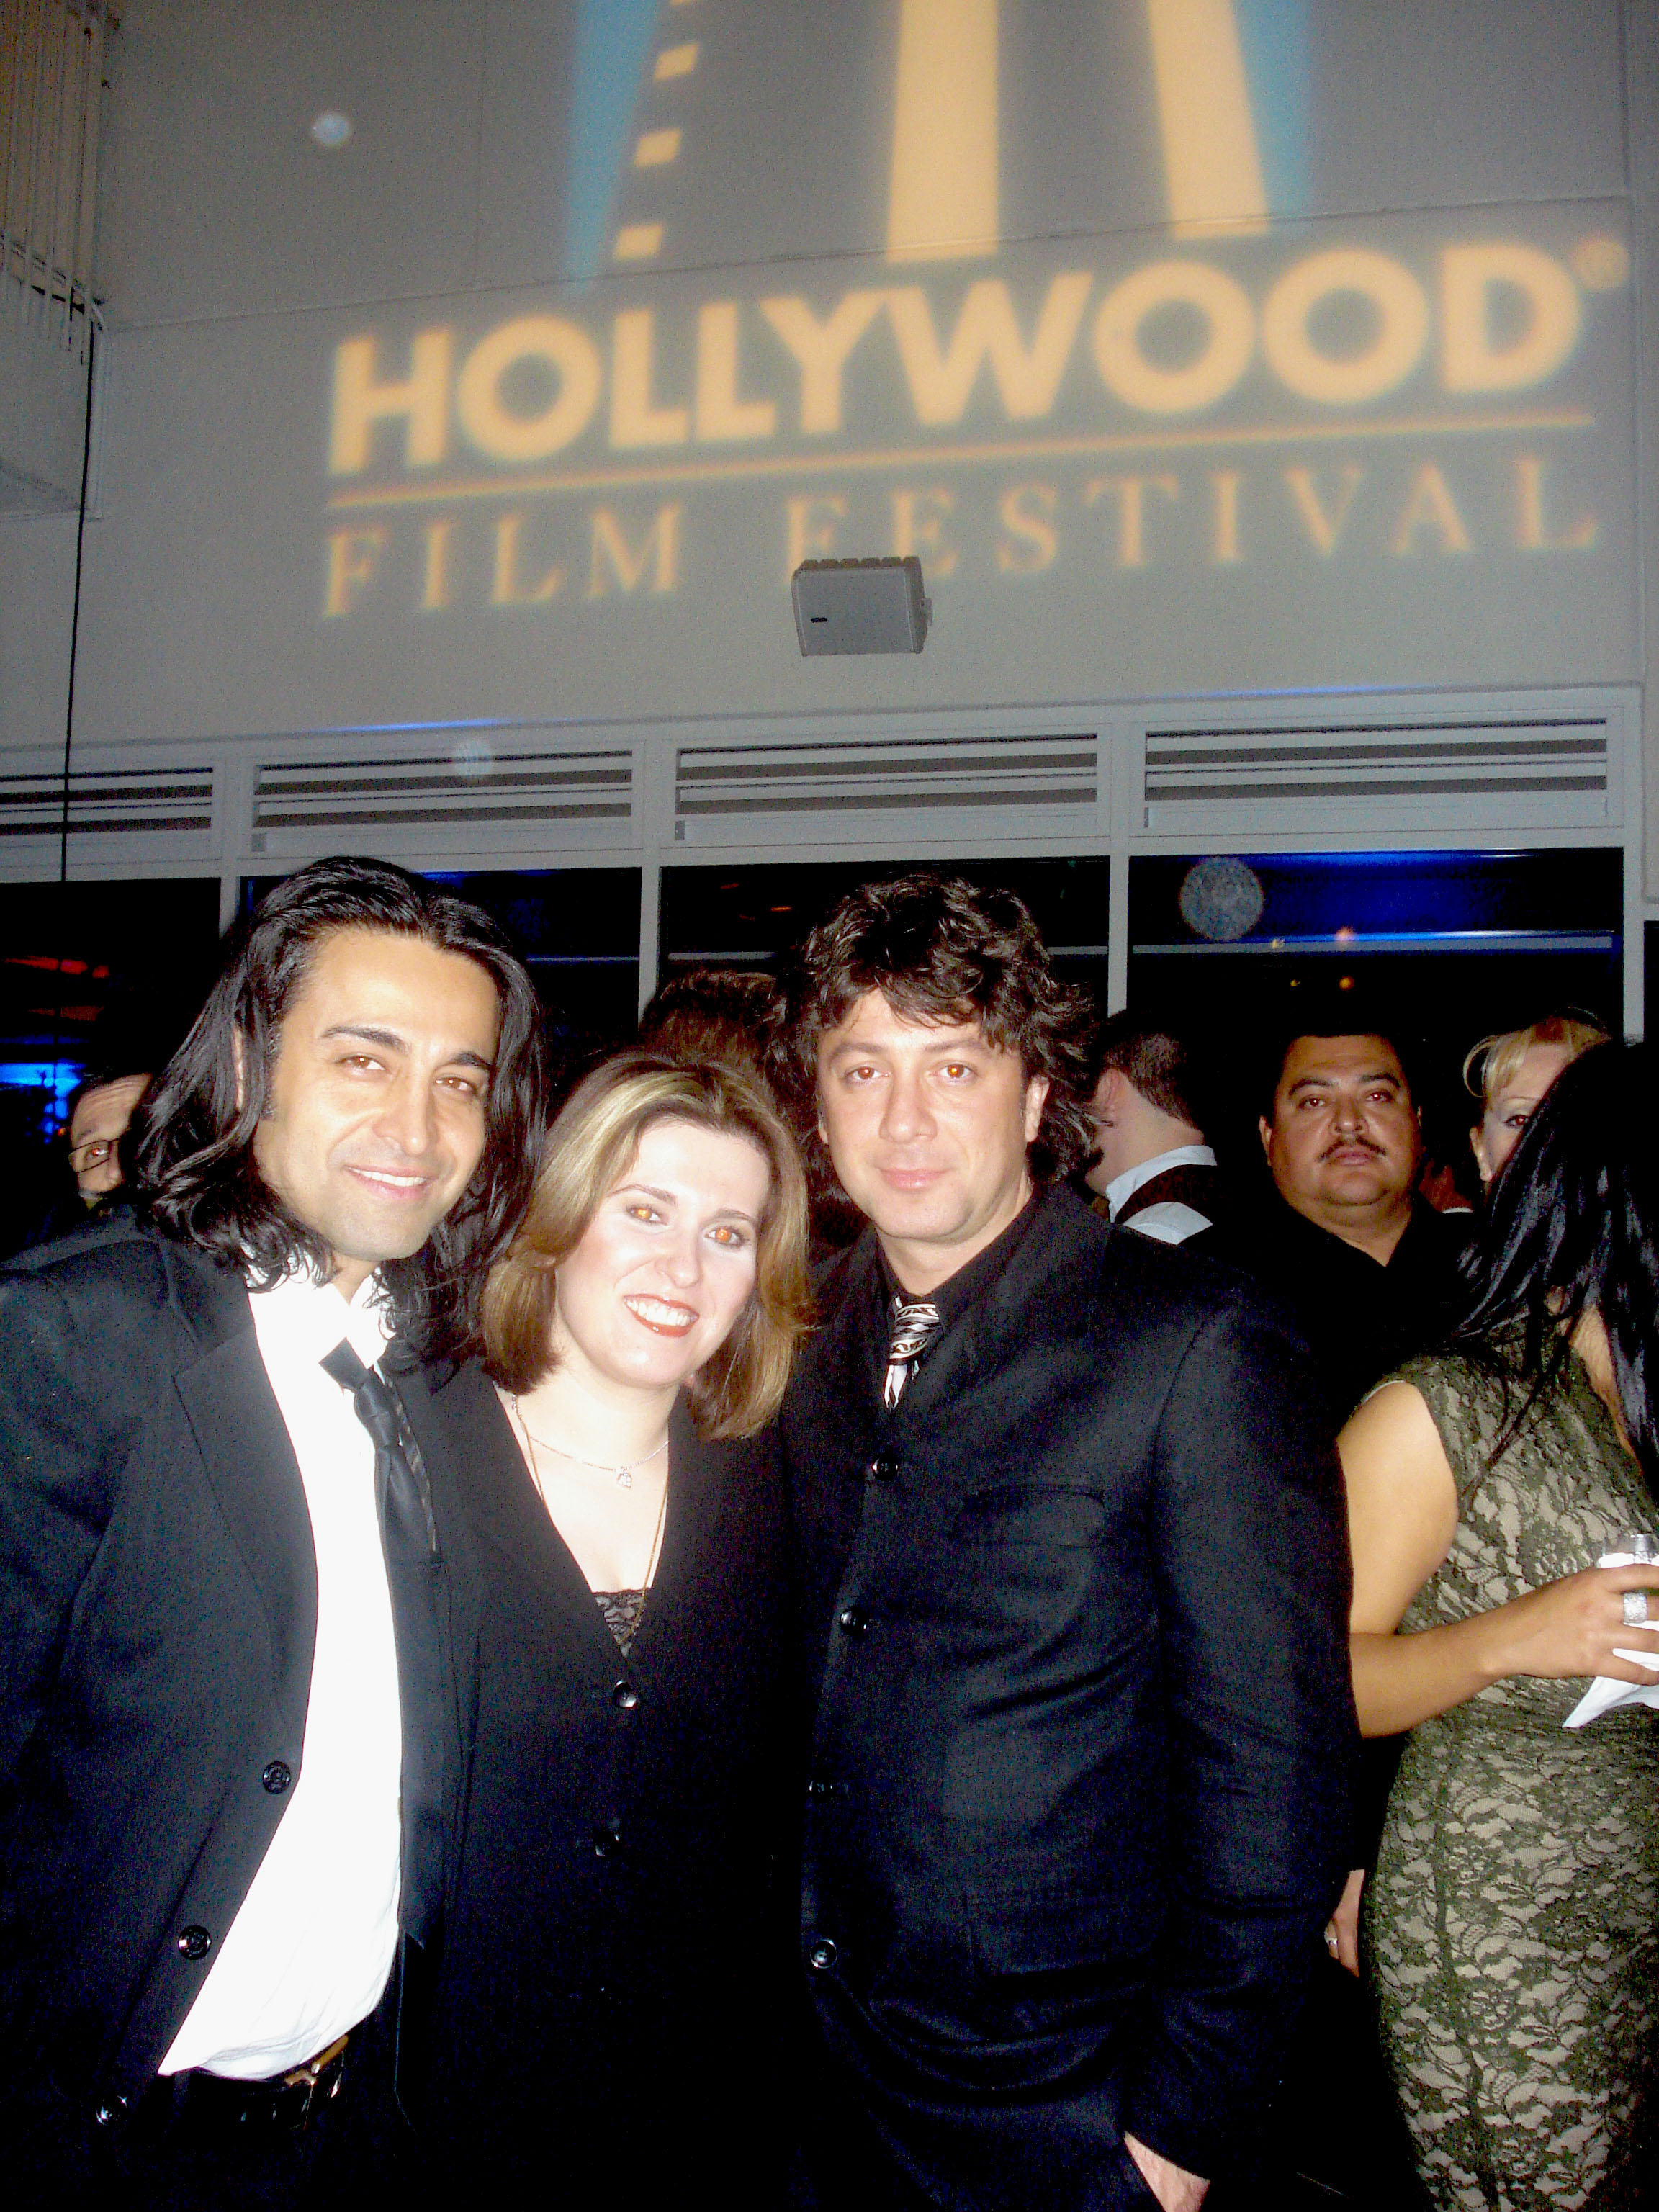 Hollywood Film Festival, Farnaz Samiinia, Farshid Amin, and Nicholas Guilak - 2008.